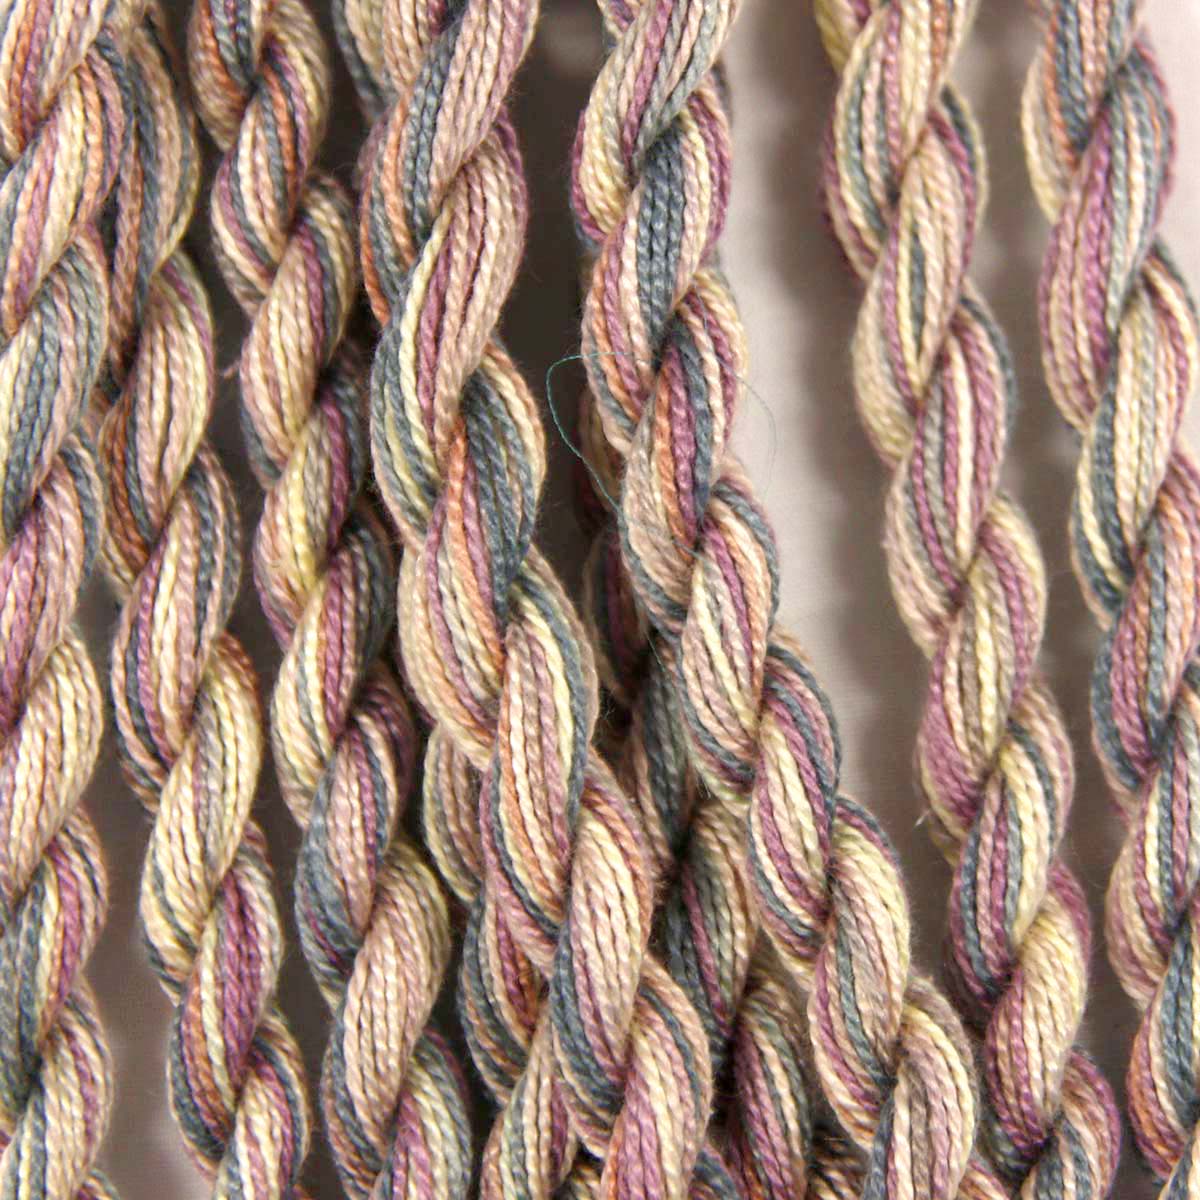 www.colourstreams.com.au Colour Streams Hand Dyed Cotton Threads Cotto Strands Slow Stitch Embroidery Textile Arts Fibre DL 48 Aubergine Truffle Purples Blues Greys Creams Green